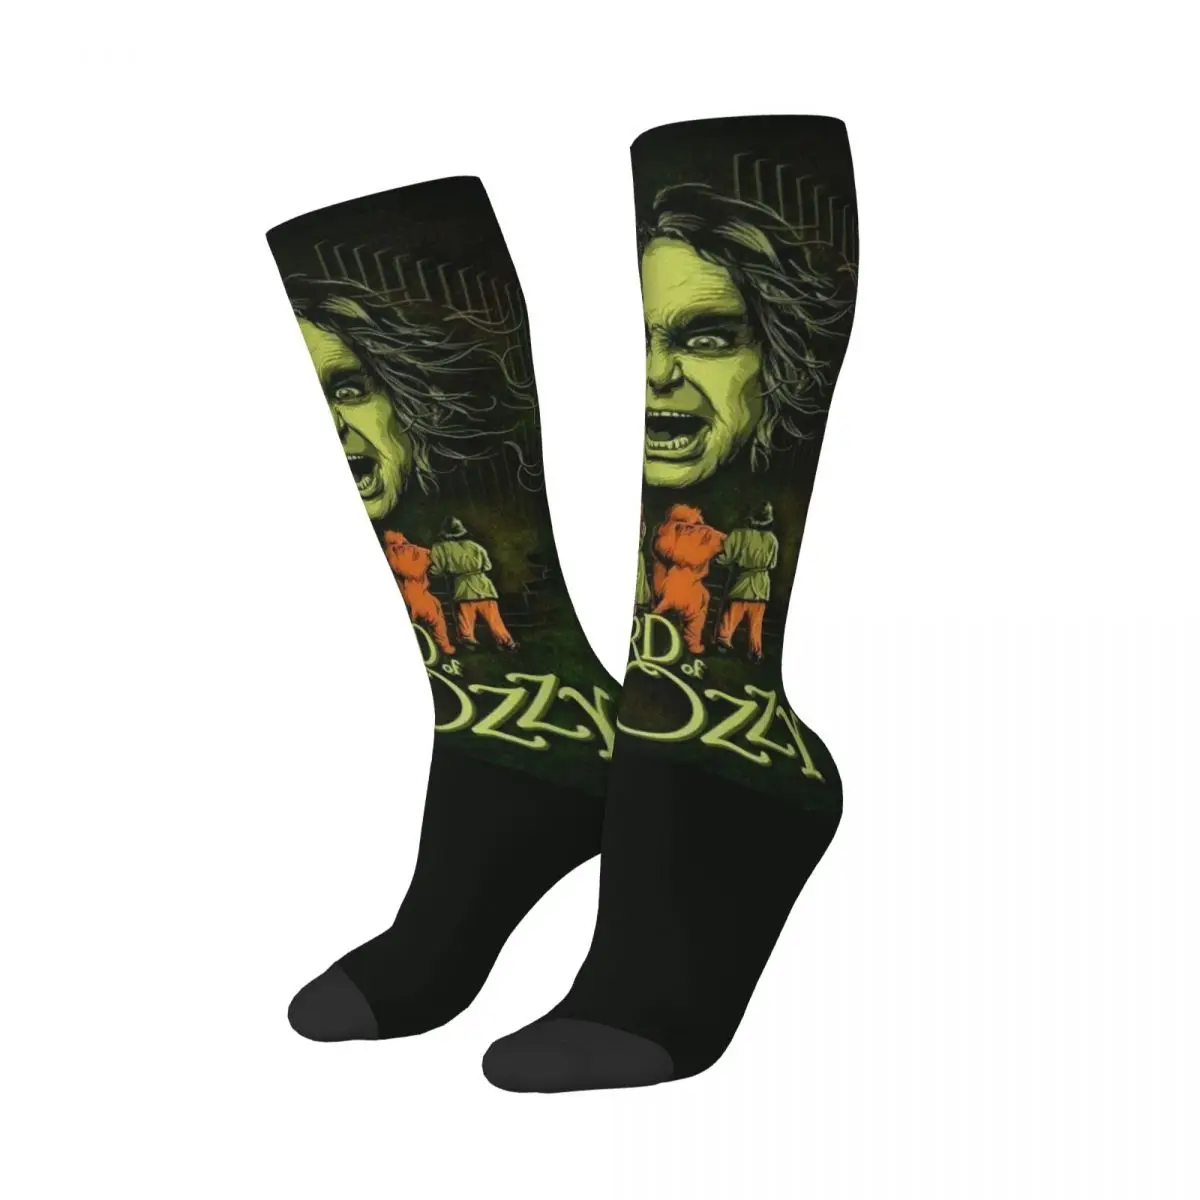 Женские носки-трубочки Ozzy Osbourne, теплые модные чулки Prince Of Darkness, новинка.